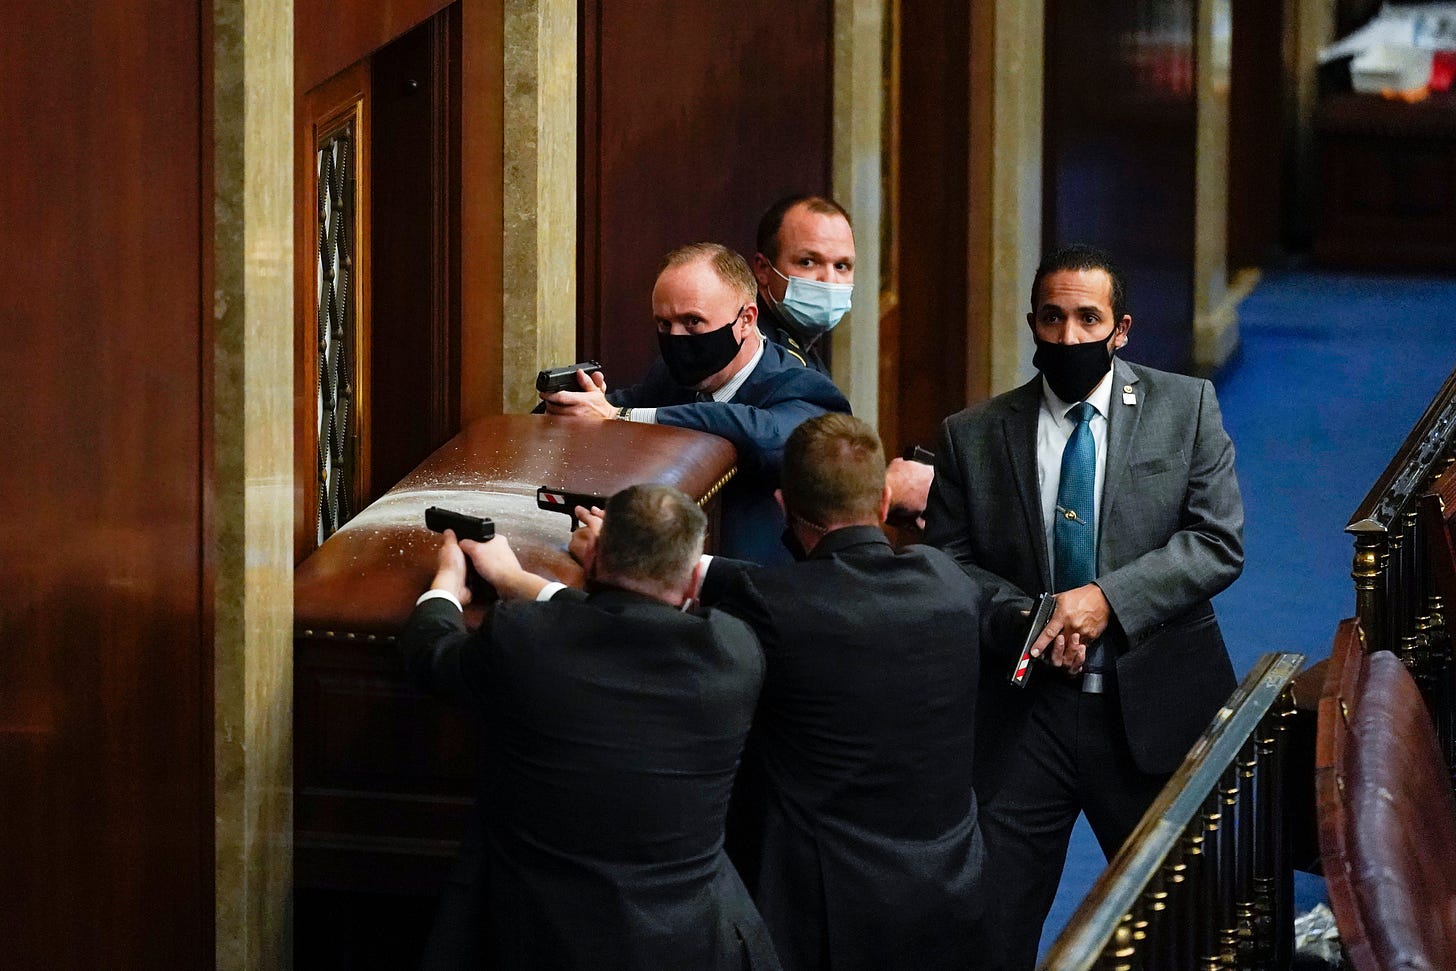 Photos: Pro-Trump Supporters Breach the Capitol Building – NBC4 Washington